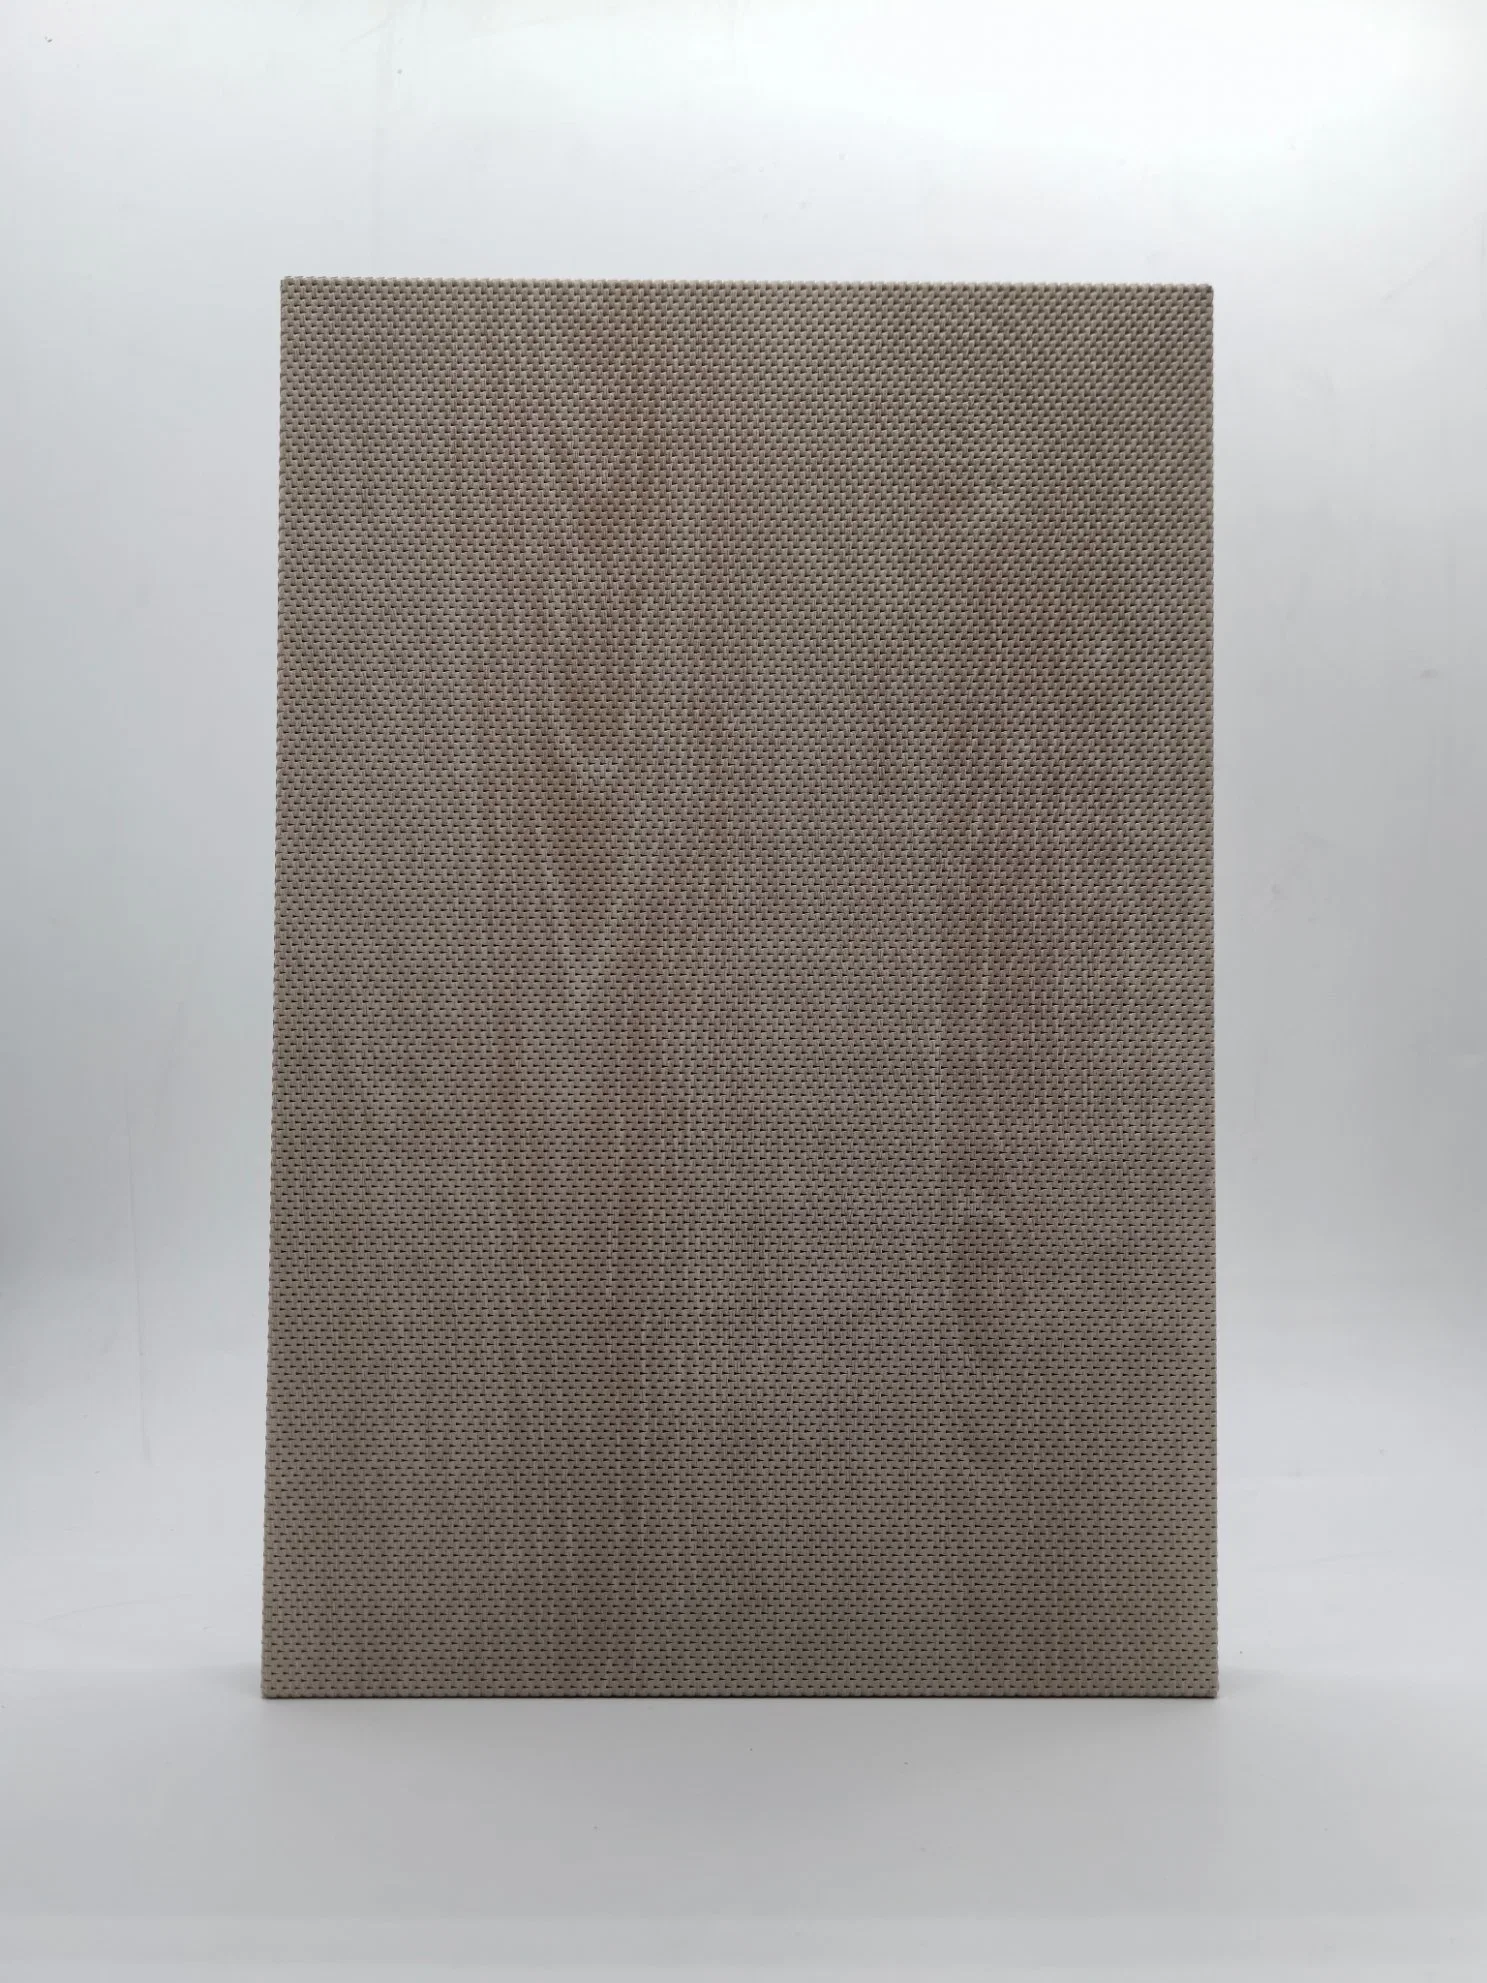 Alumínio Micro Honeycomb Perforated Acoustic Panel Building material Interior Wall Produto à prova de teto